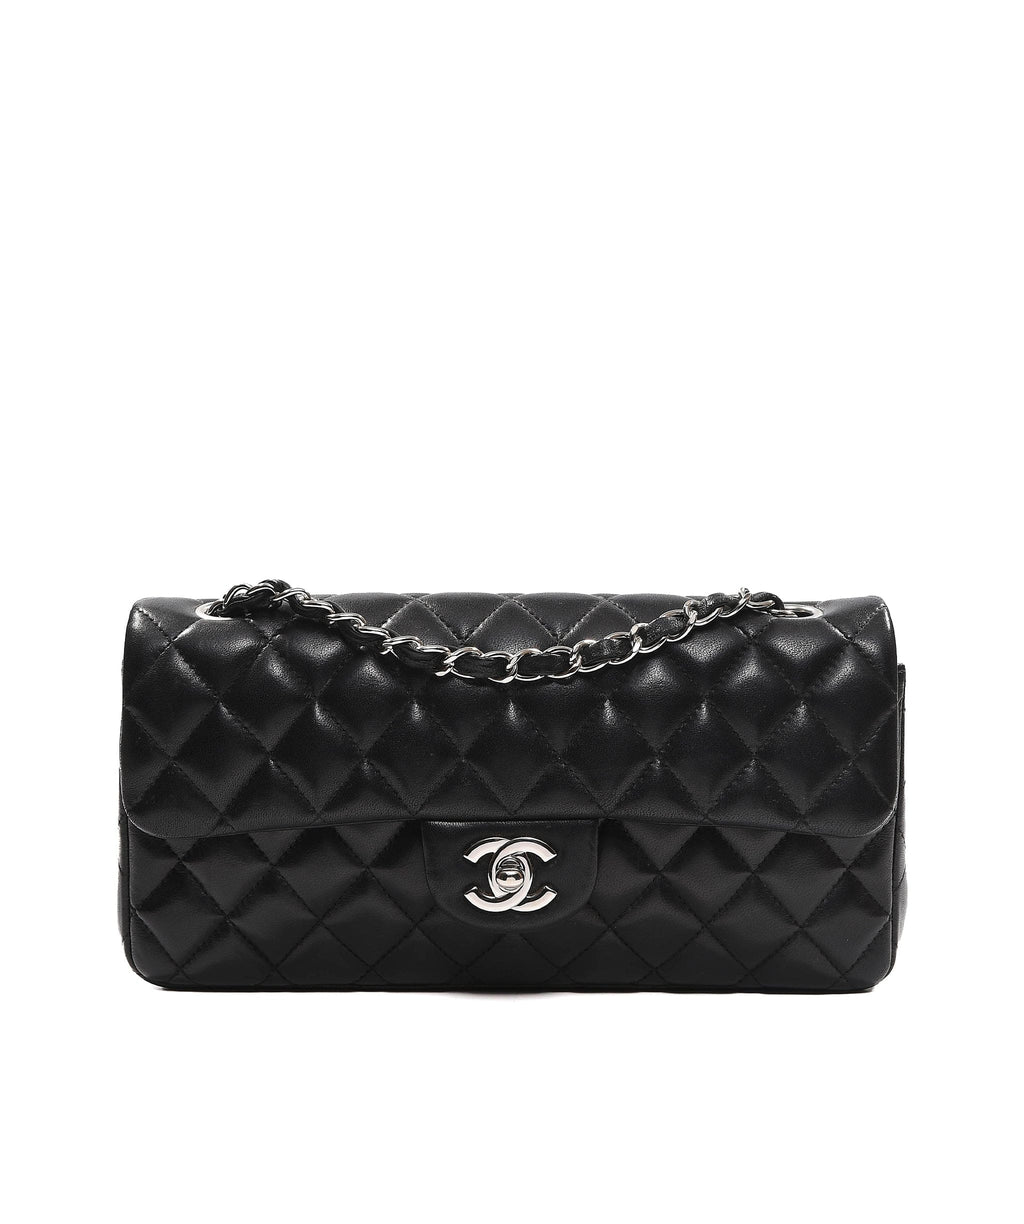 Authentic Chanel East West Flap Shoulder Bag in Black Caviar